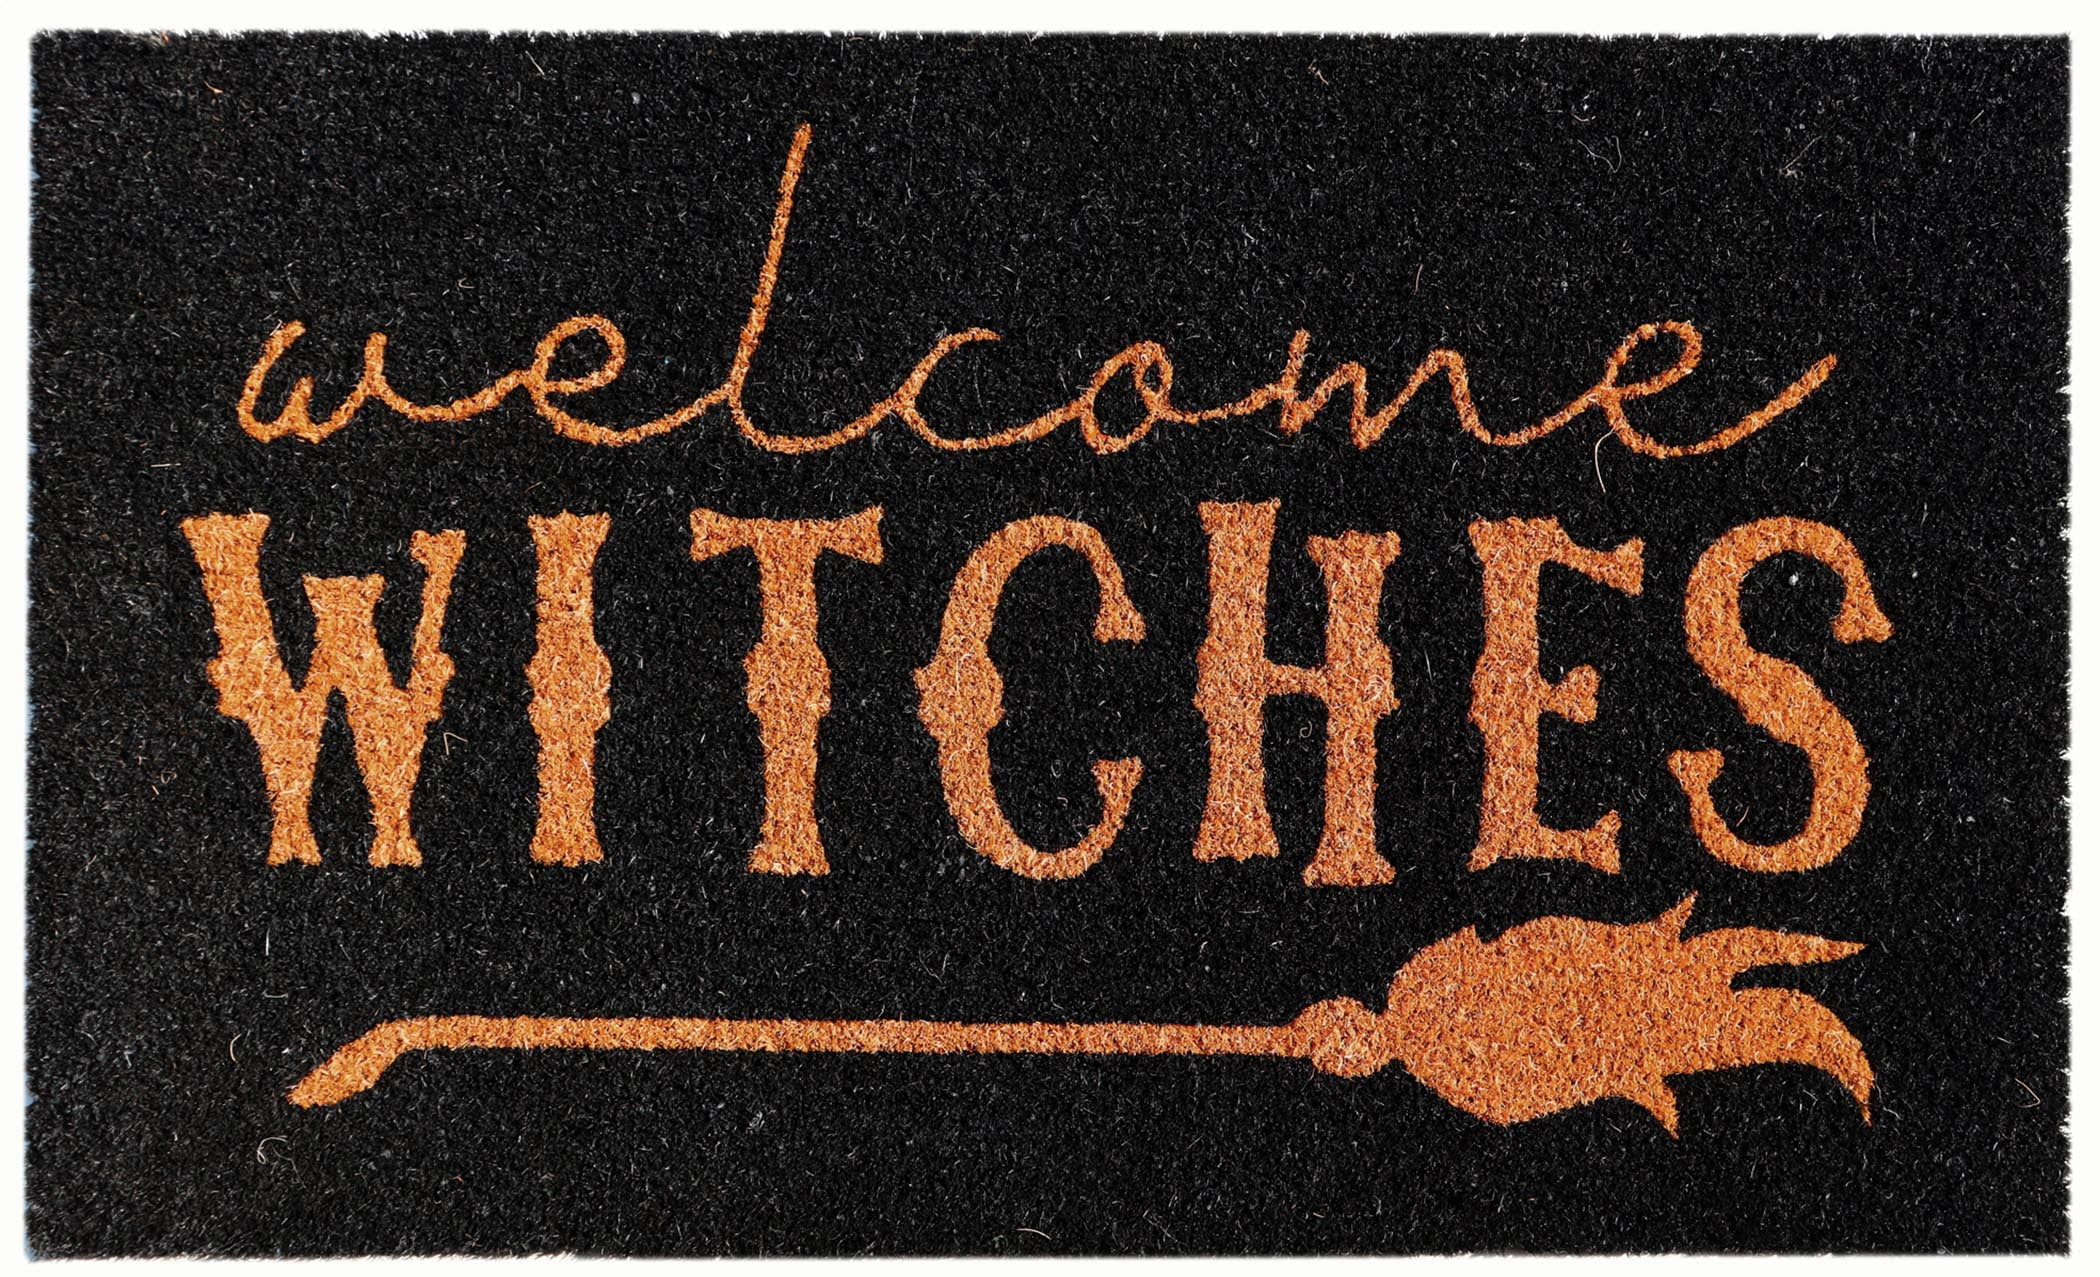 Halloween Door Mat Witches Theme Welcome Mat Winter Doormat Farmhouse  Kitchen